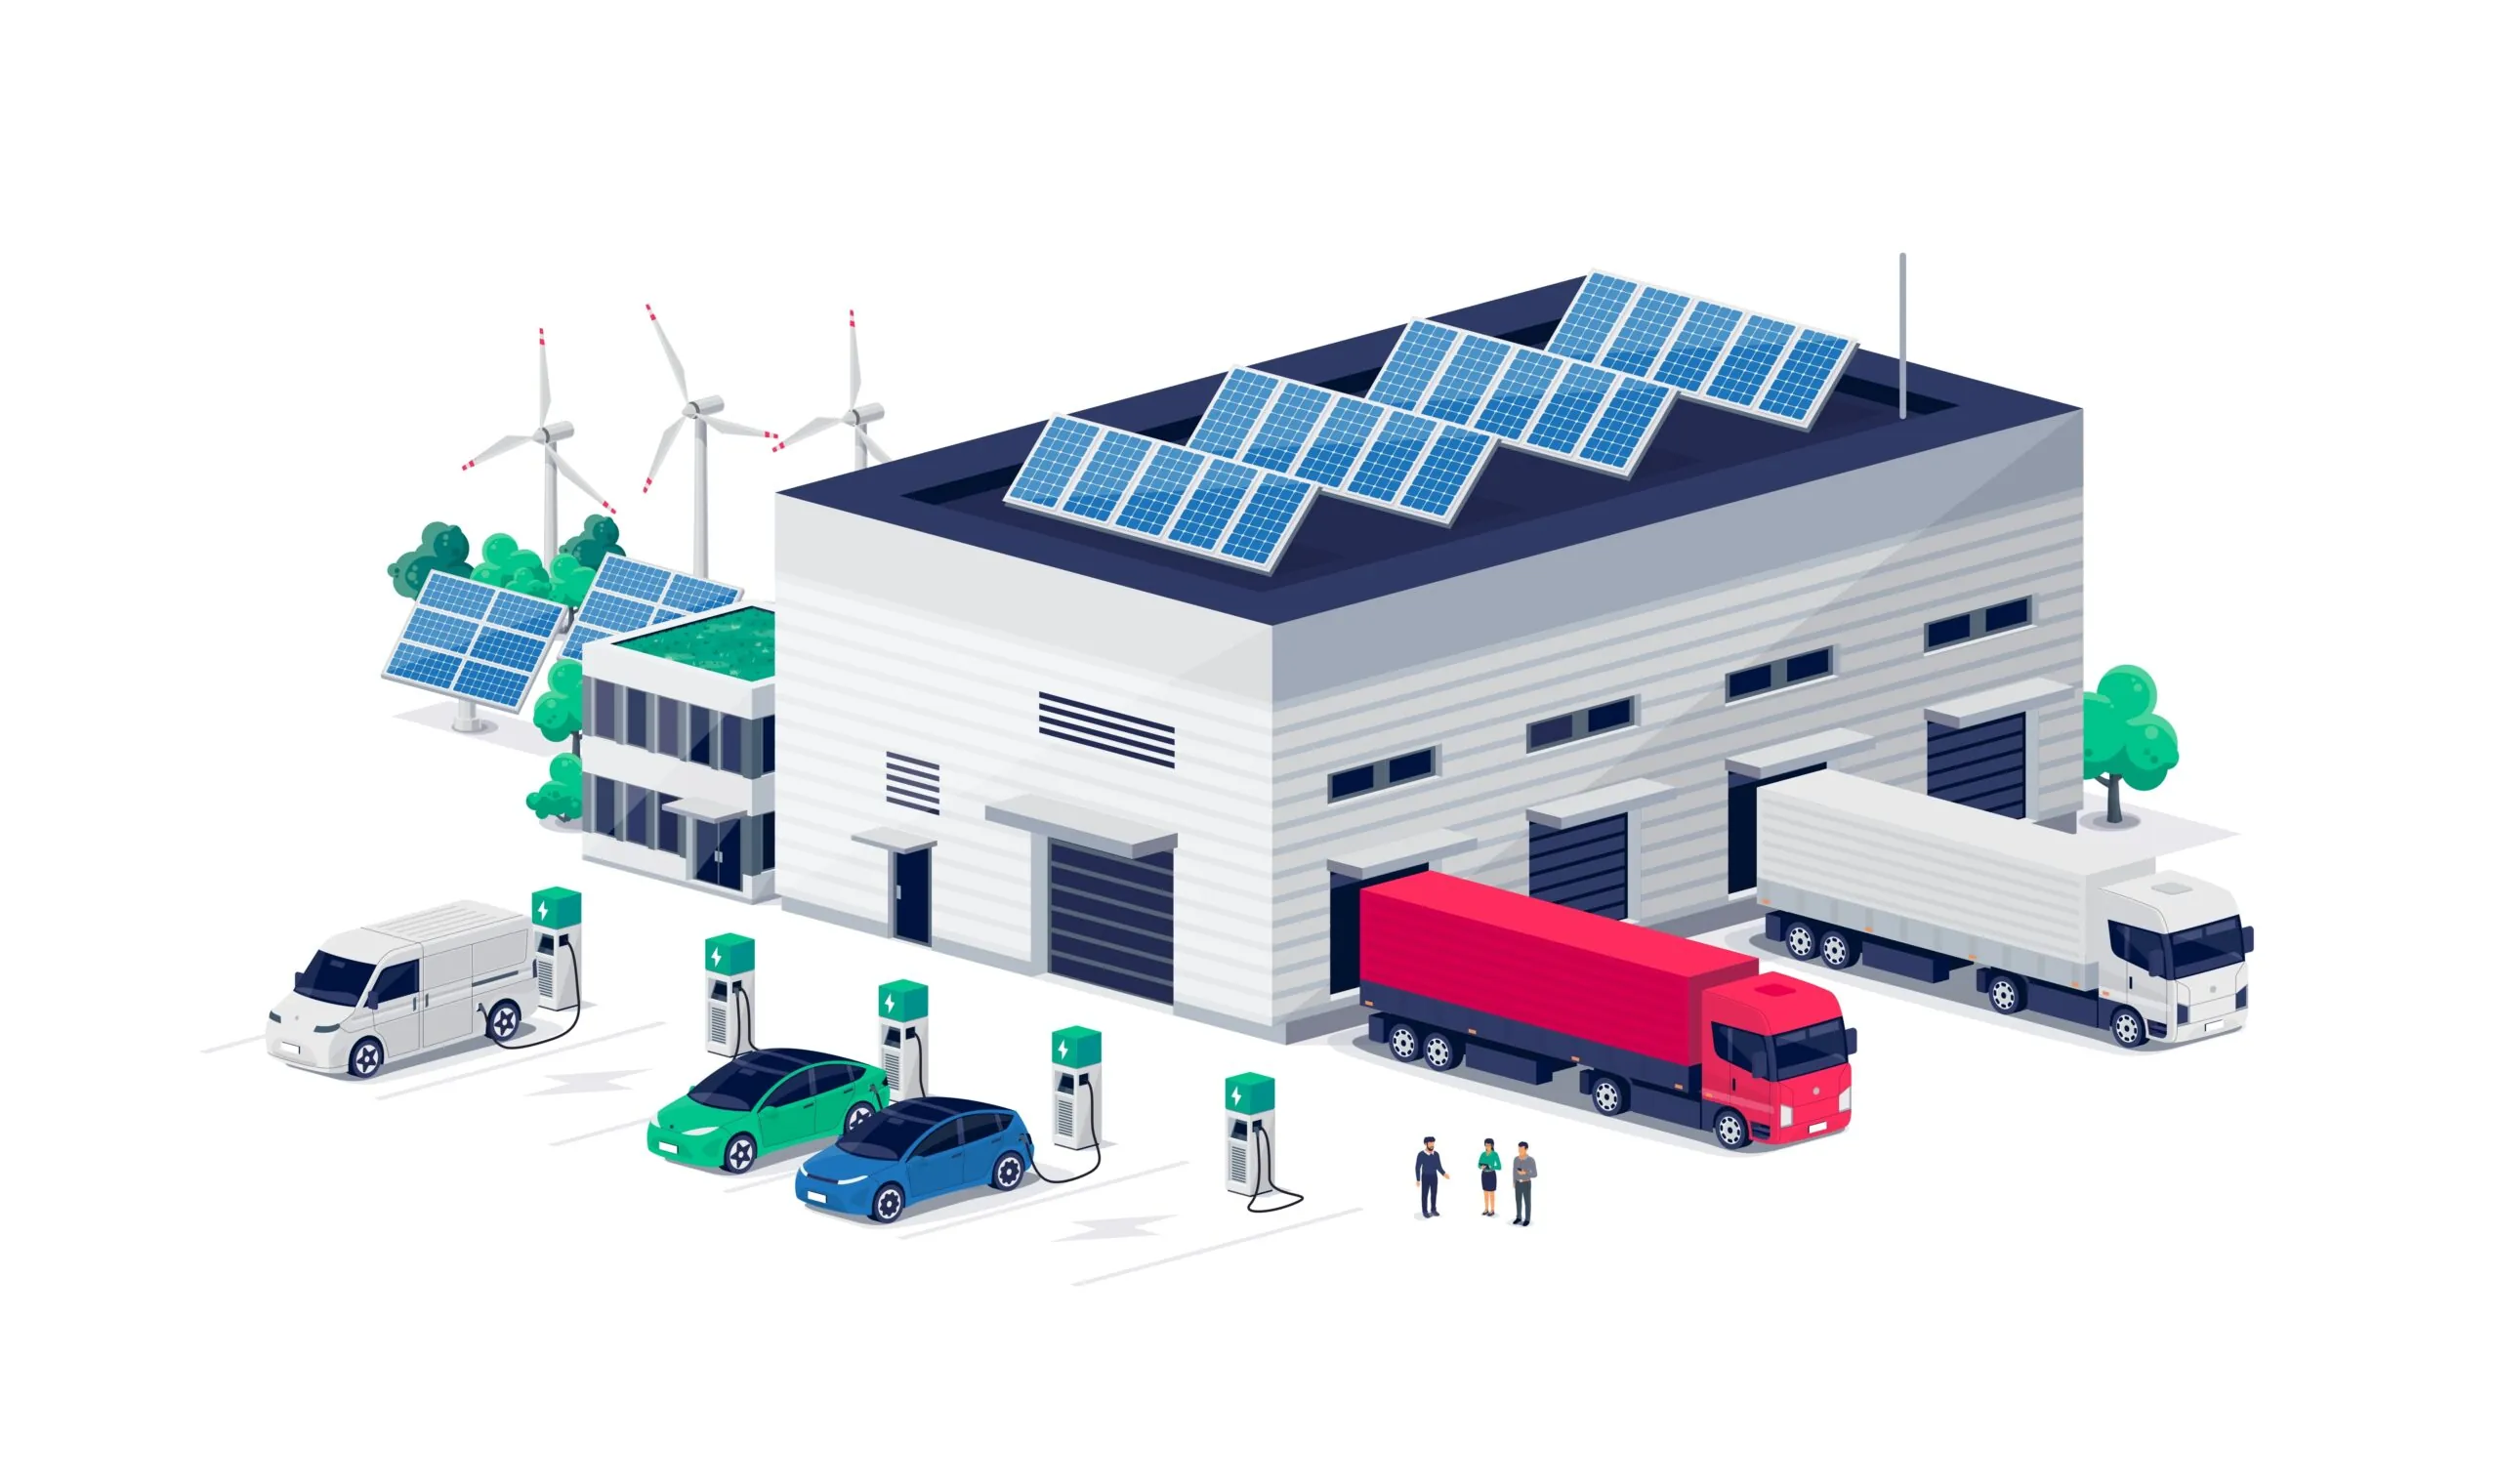 Renewable-energy terminal station for freight trucks illustration.